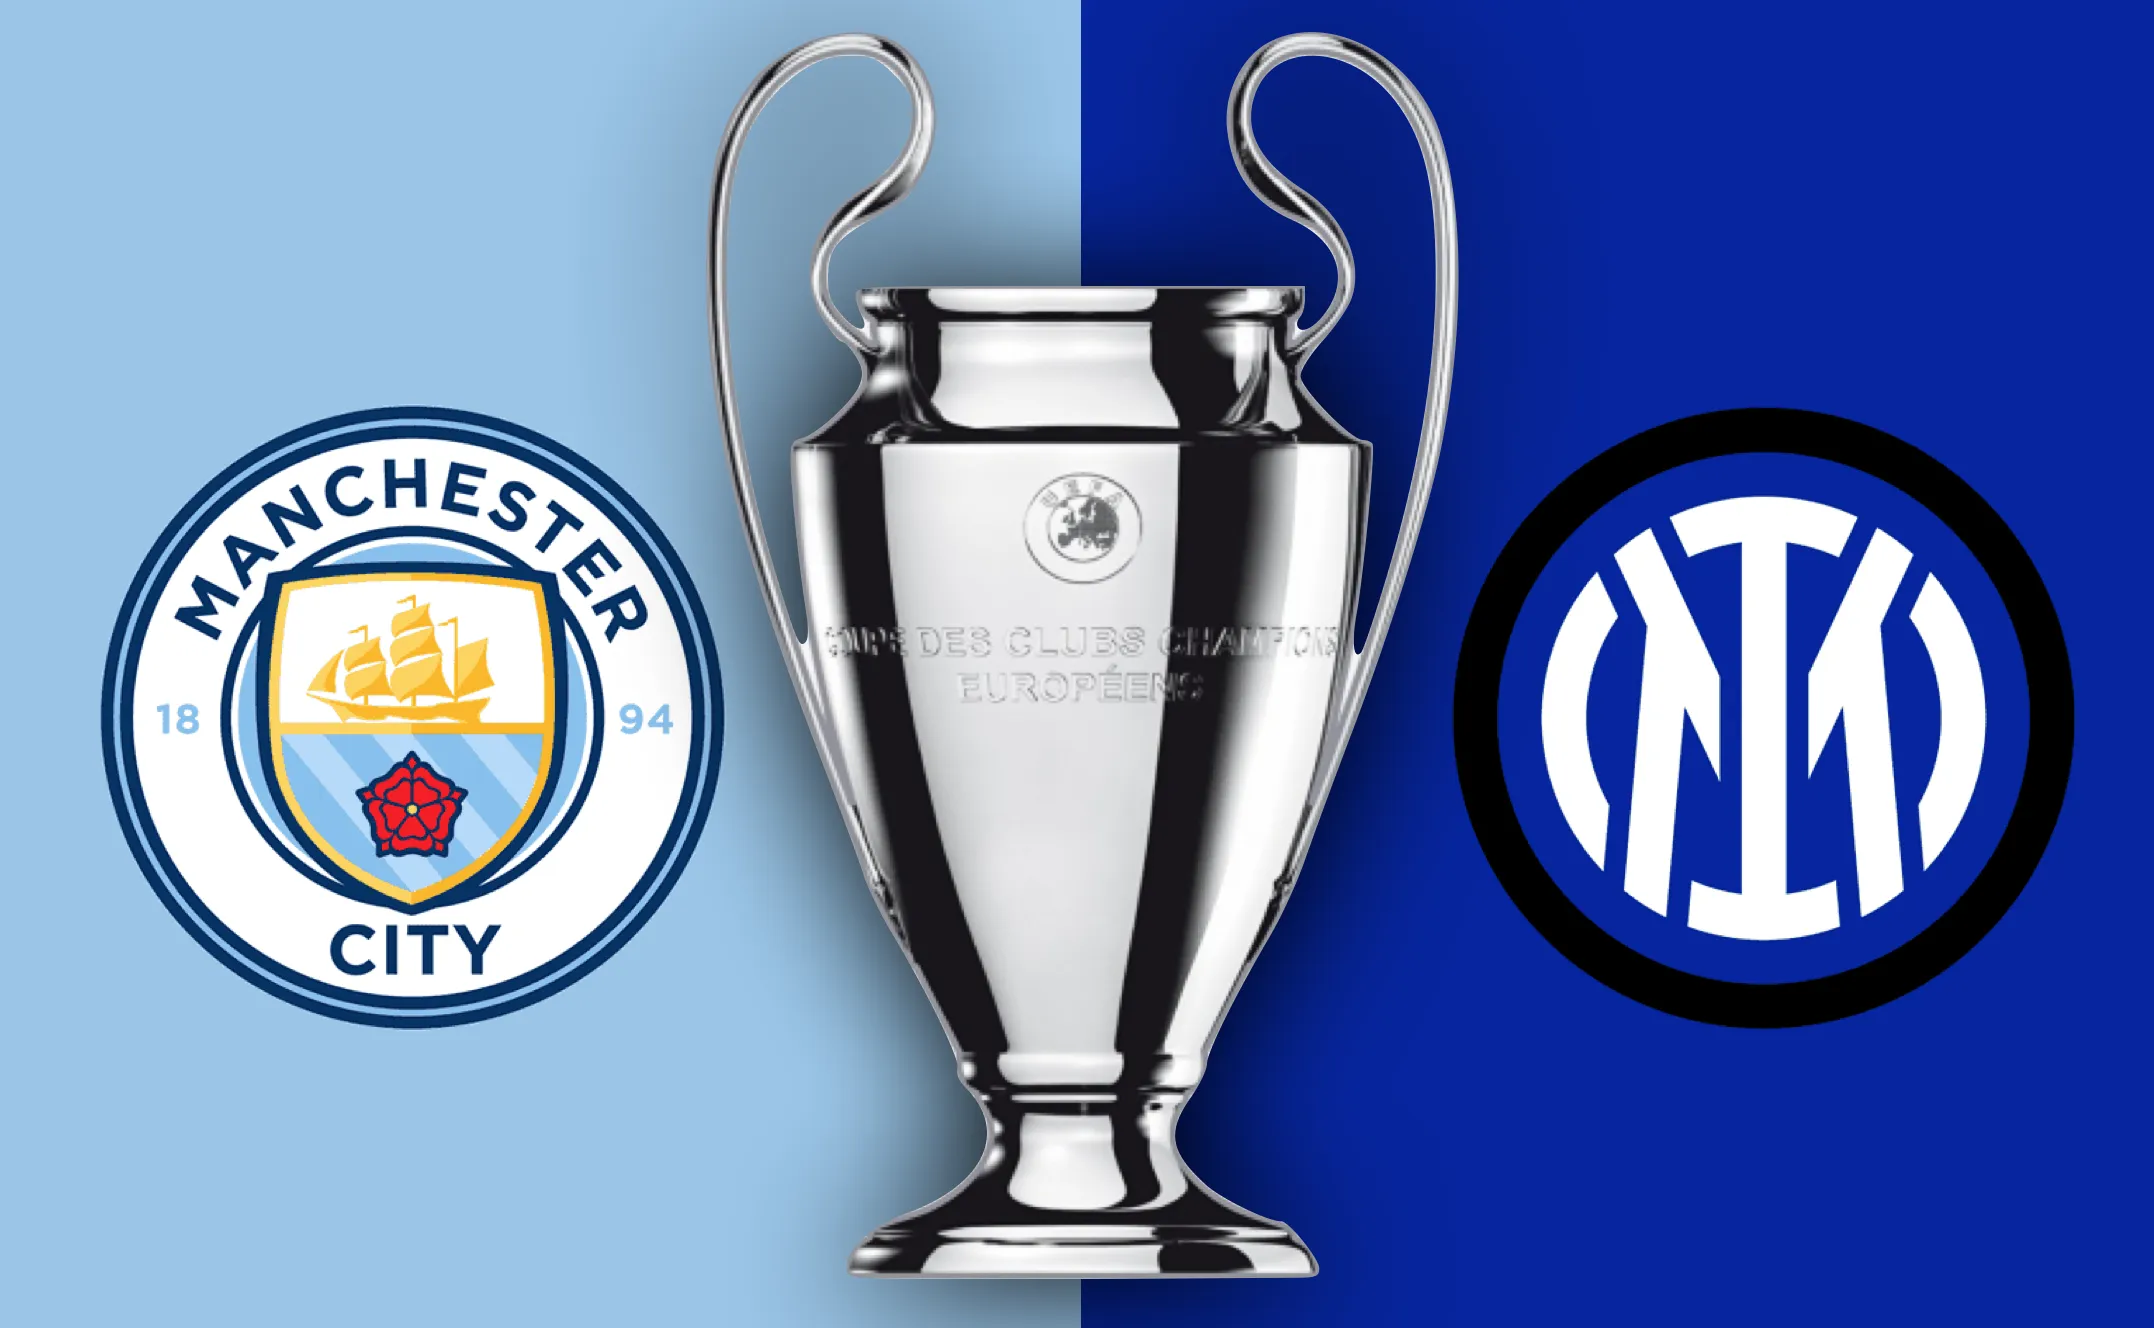 Manchester City vs Inter Milan UEFA final Cup and logos